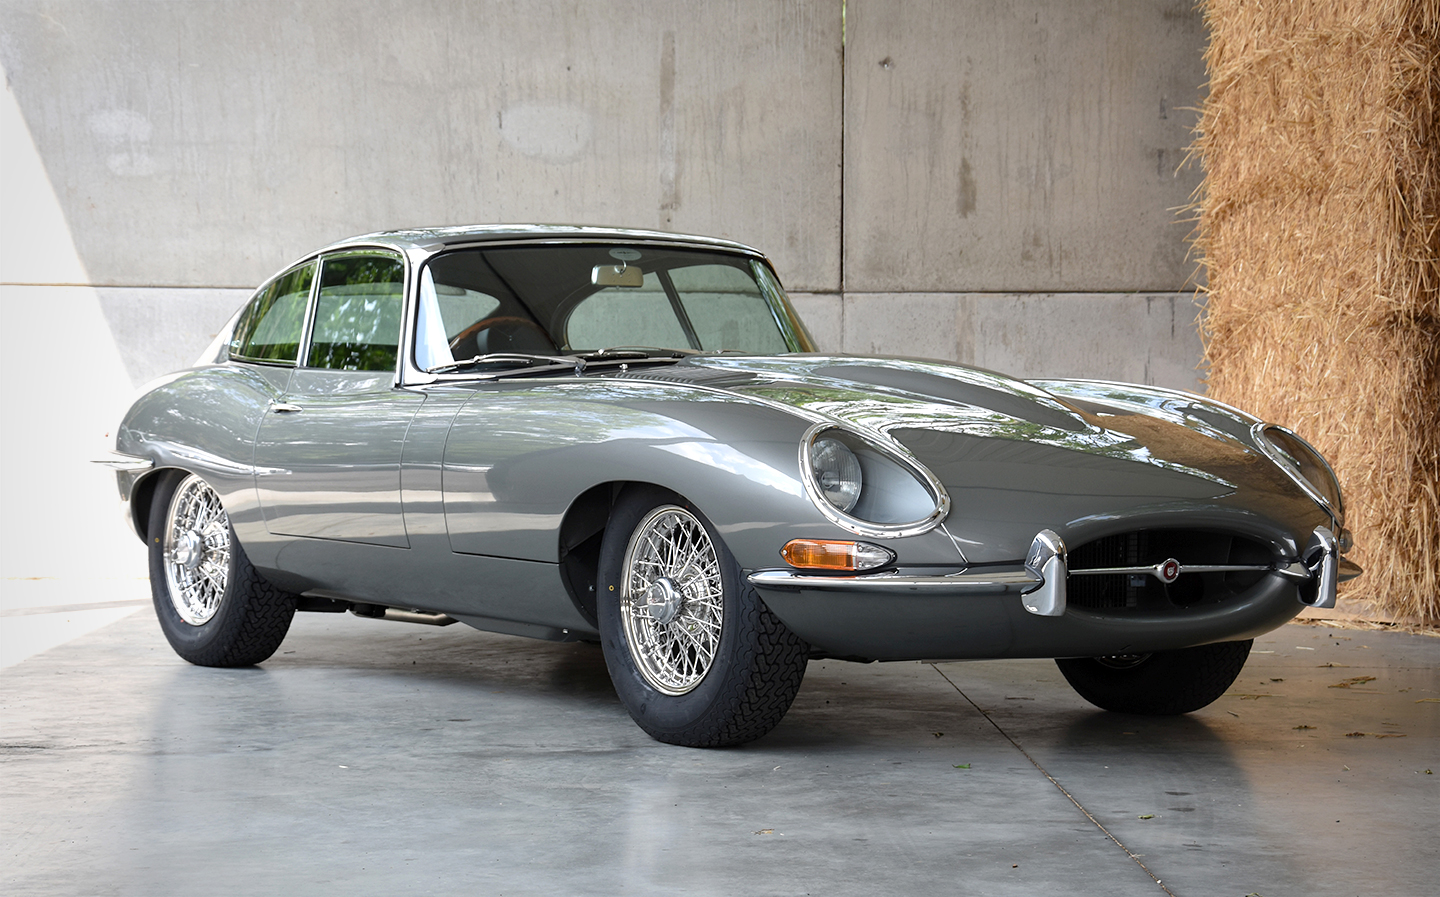 What makes a classic car 'original'? Jaguar E-type restored